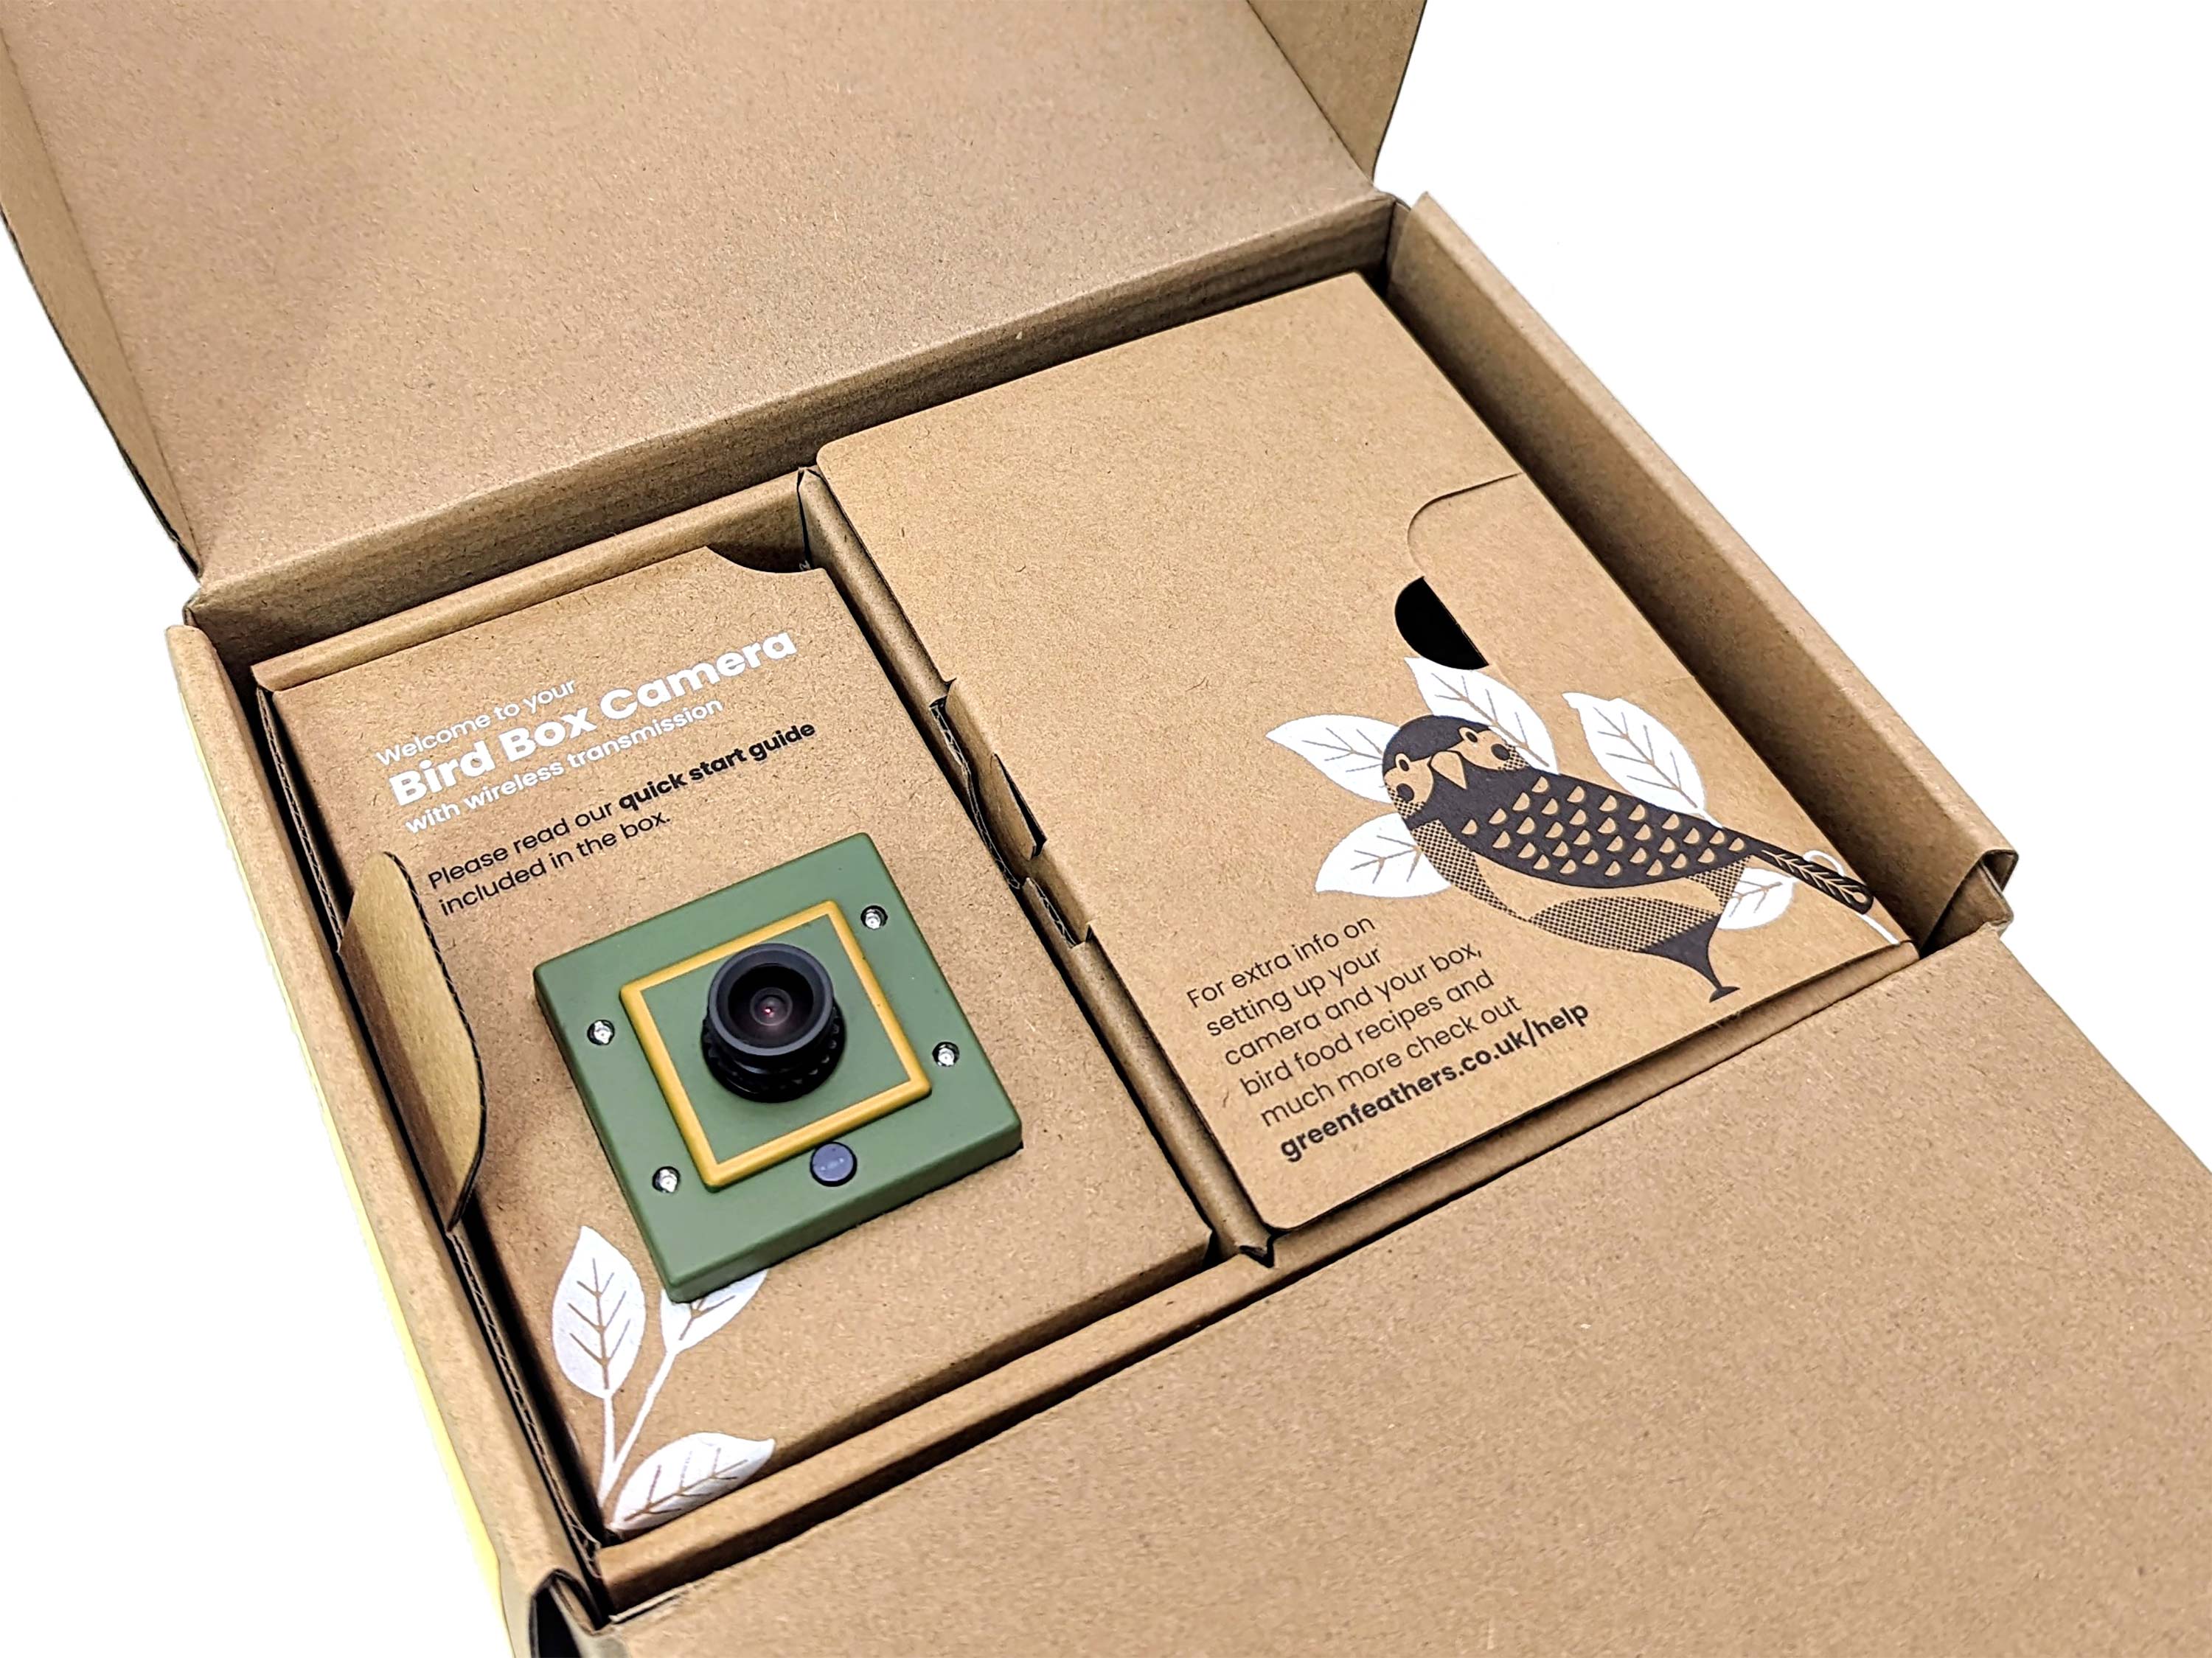 wireless bird box camera presentation box